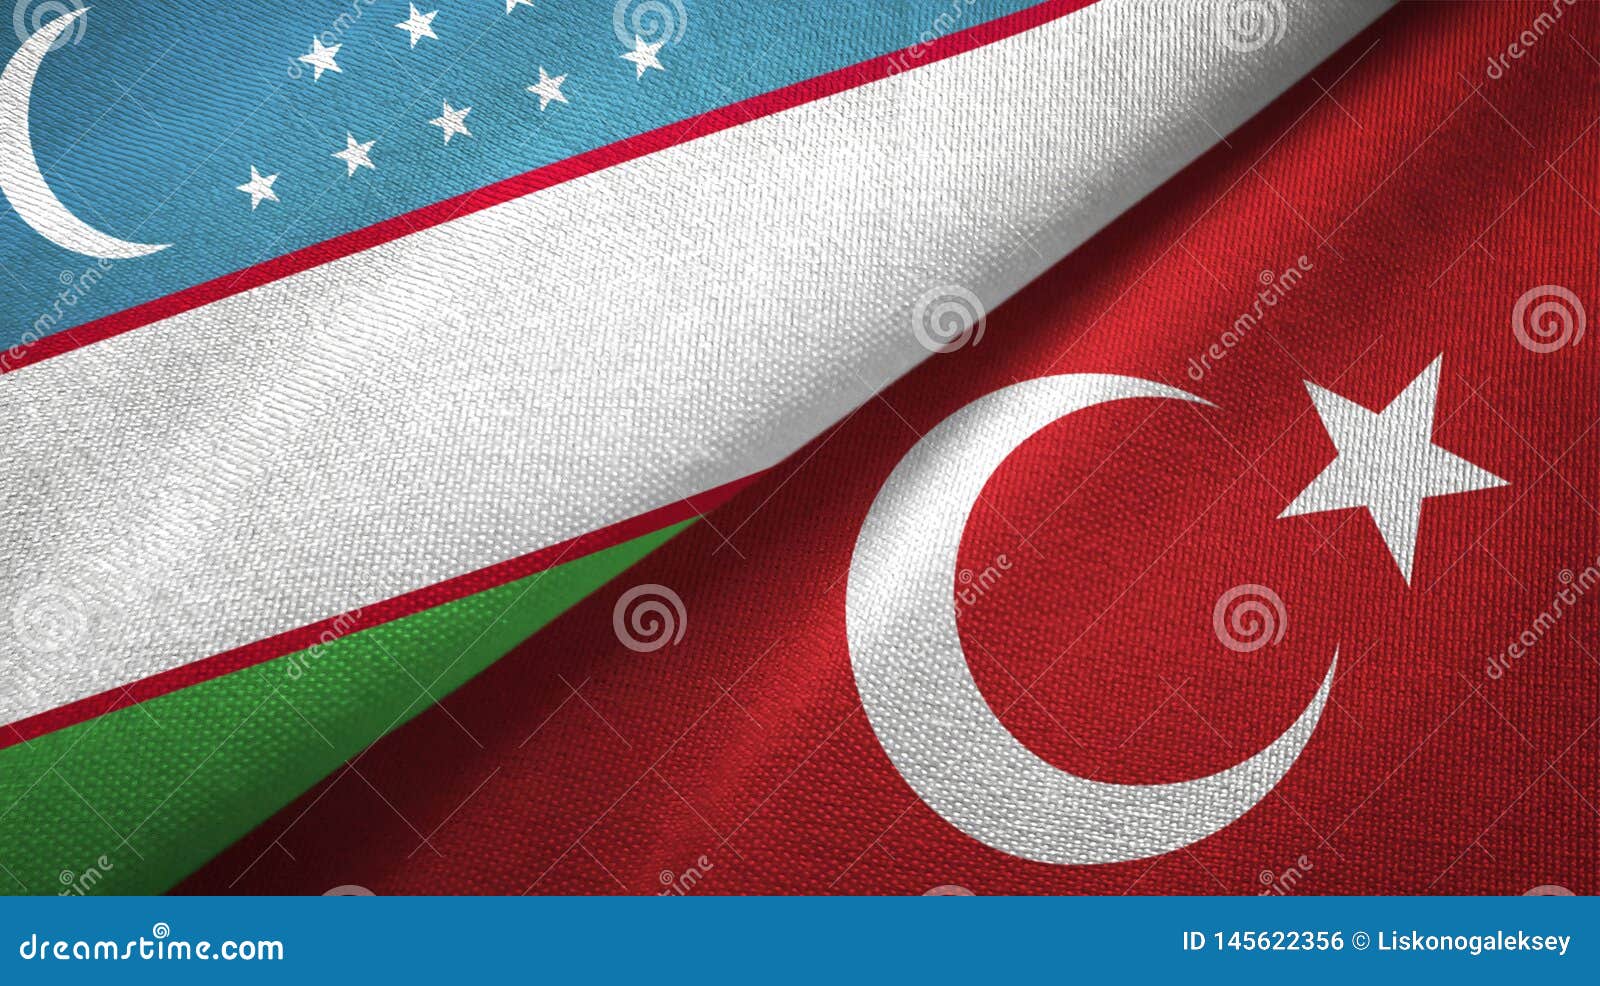 Uzb turk. Туркия и Узбекистана флаг. Узбекистан Турция Flag. Турция Uzbekistan Bayragi. Флаг Турции 2022.